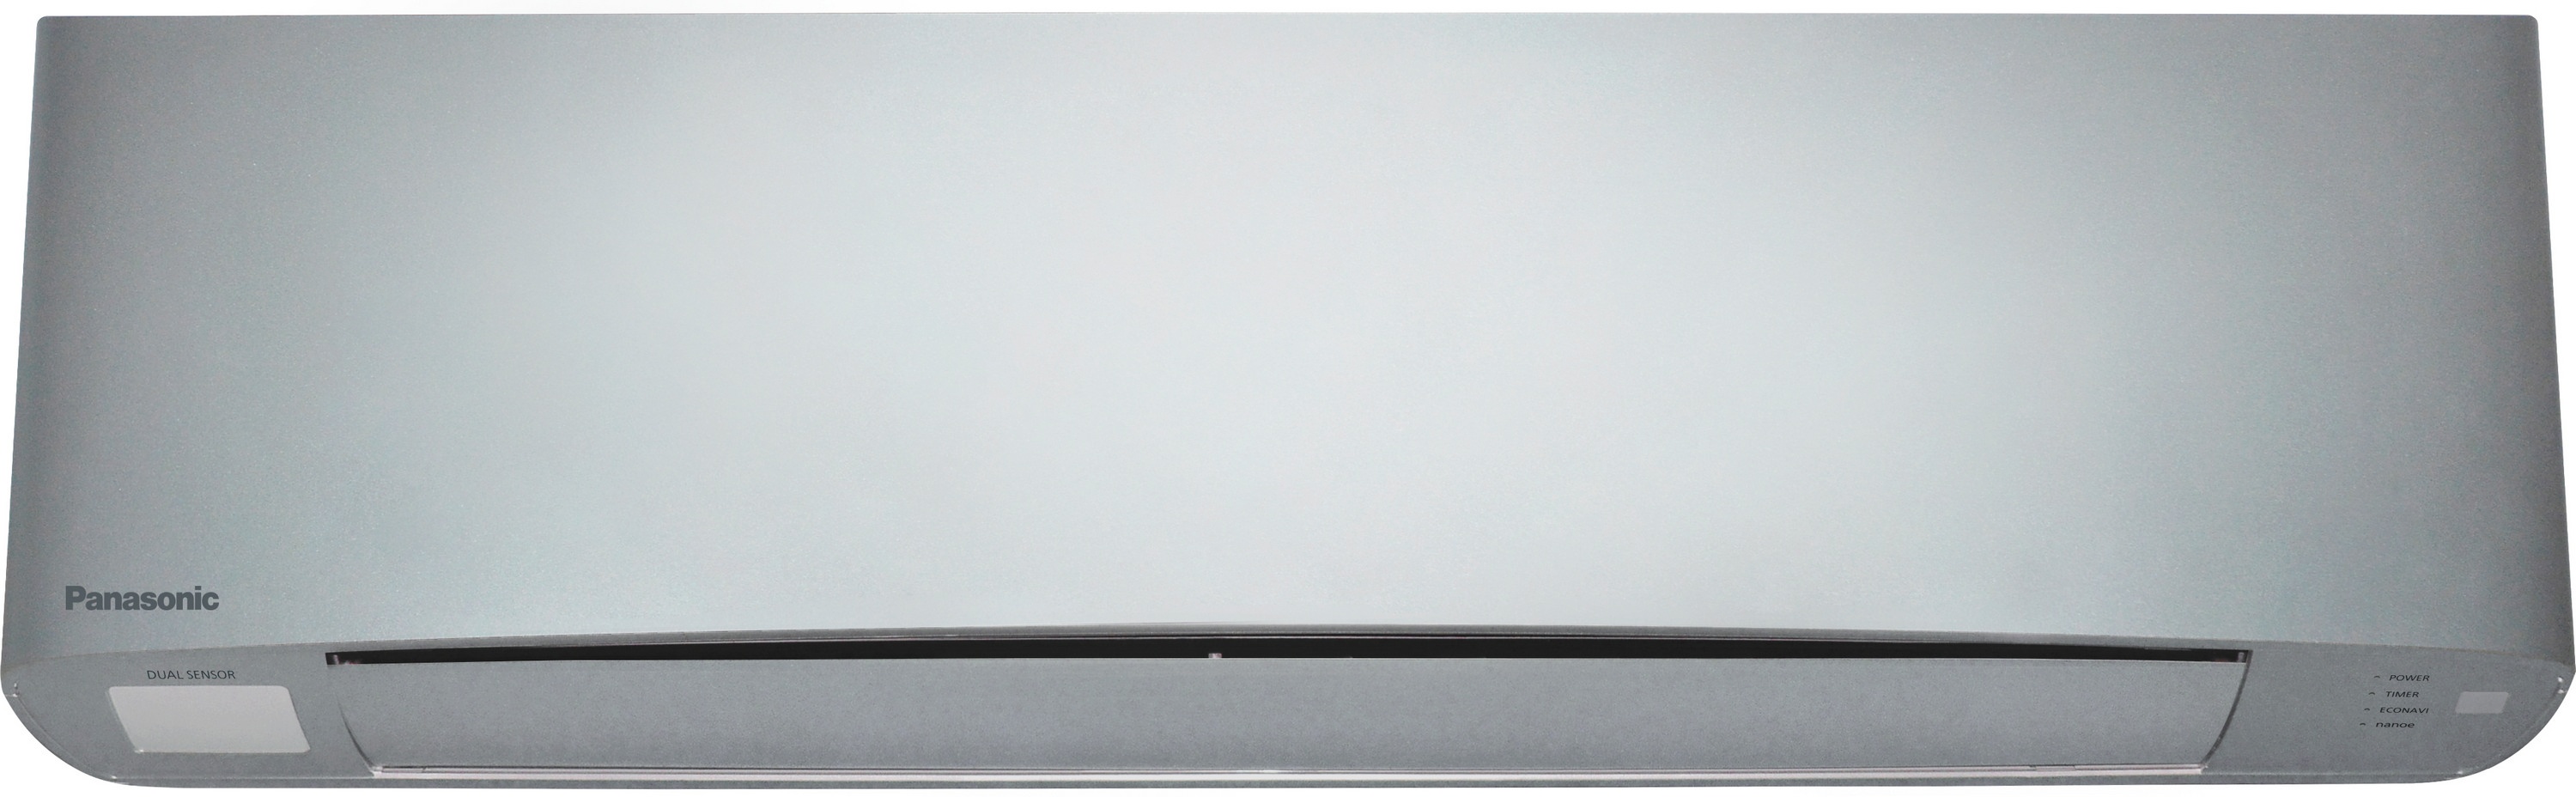 Внутренний блок мультисплит-системы Panasonic Flagship Silver CS-XZ25TKEW цена 39999.00 грн - фотография 2